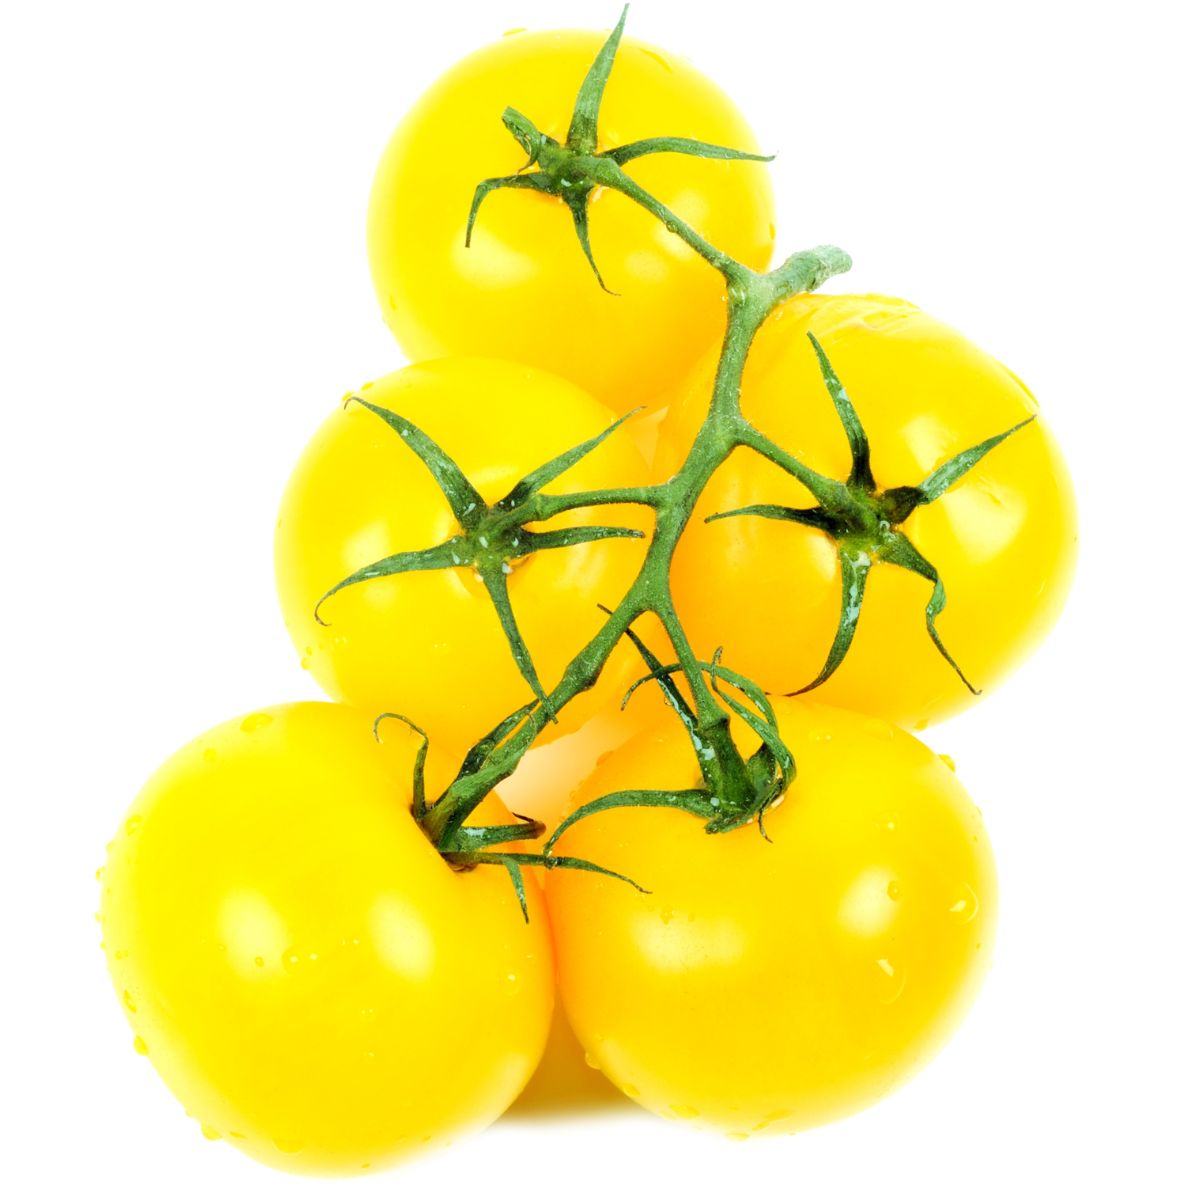 5 yellow tomatoes.